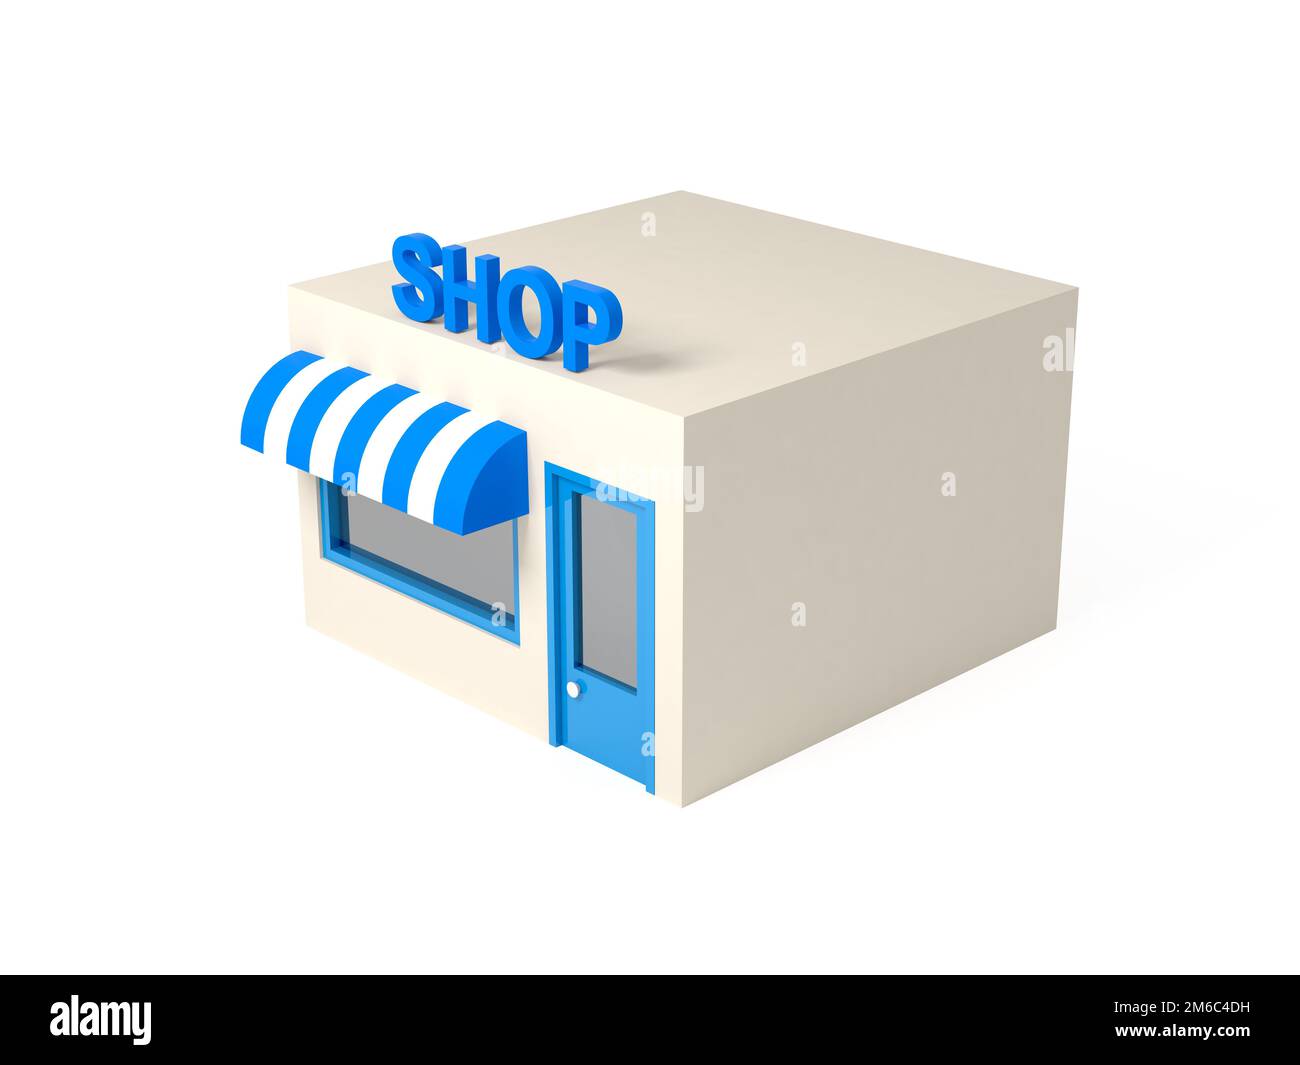 3d isometric style shop illustration Stock Photo